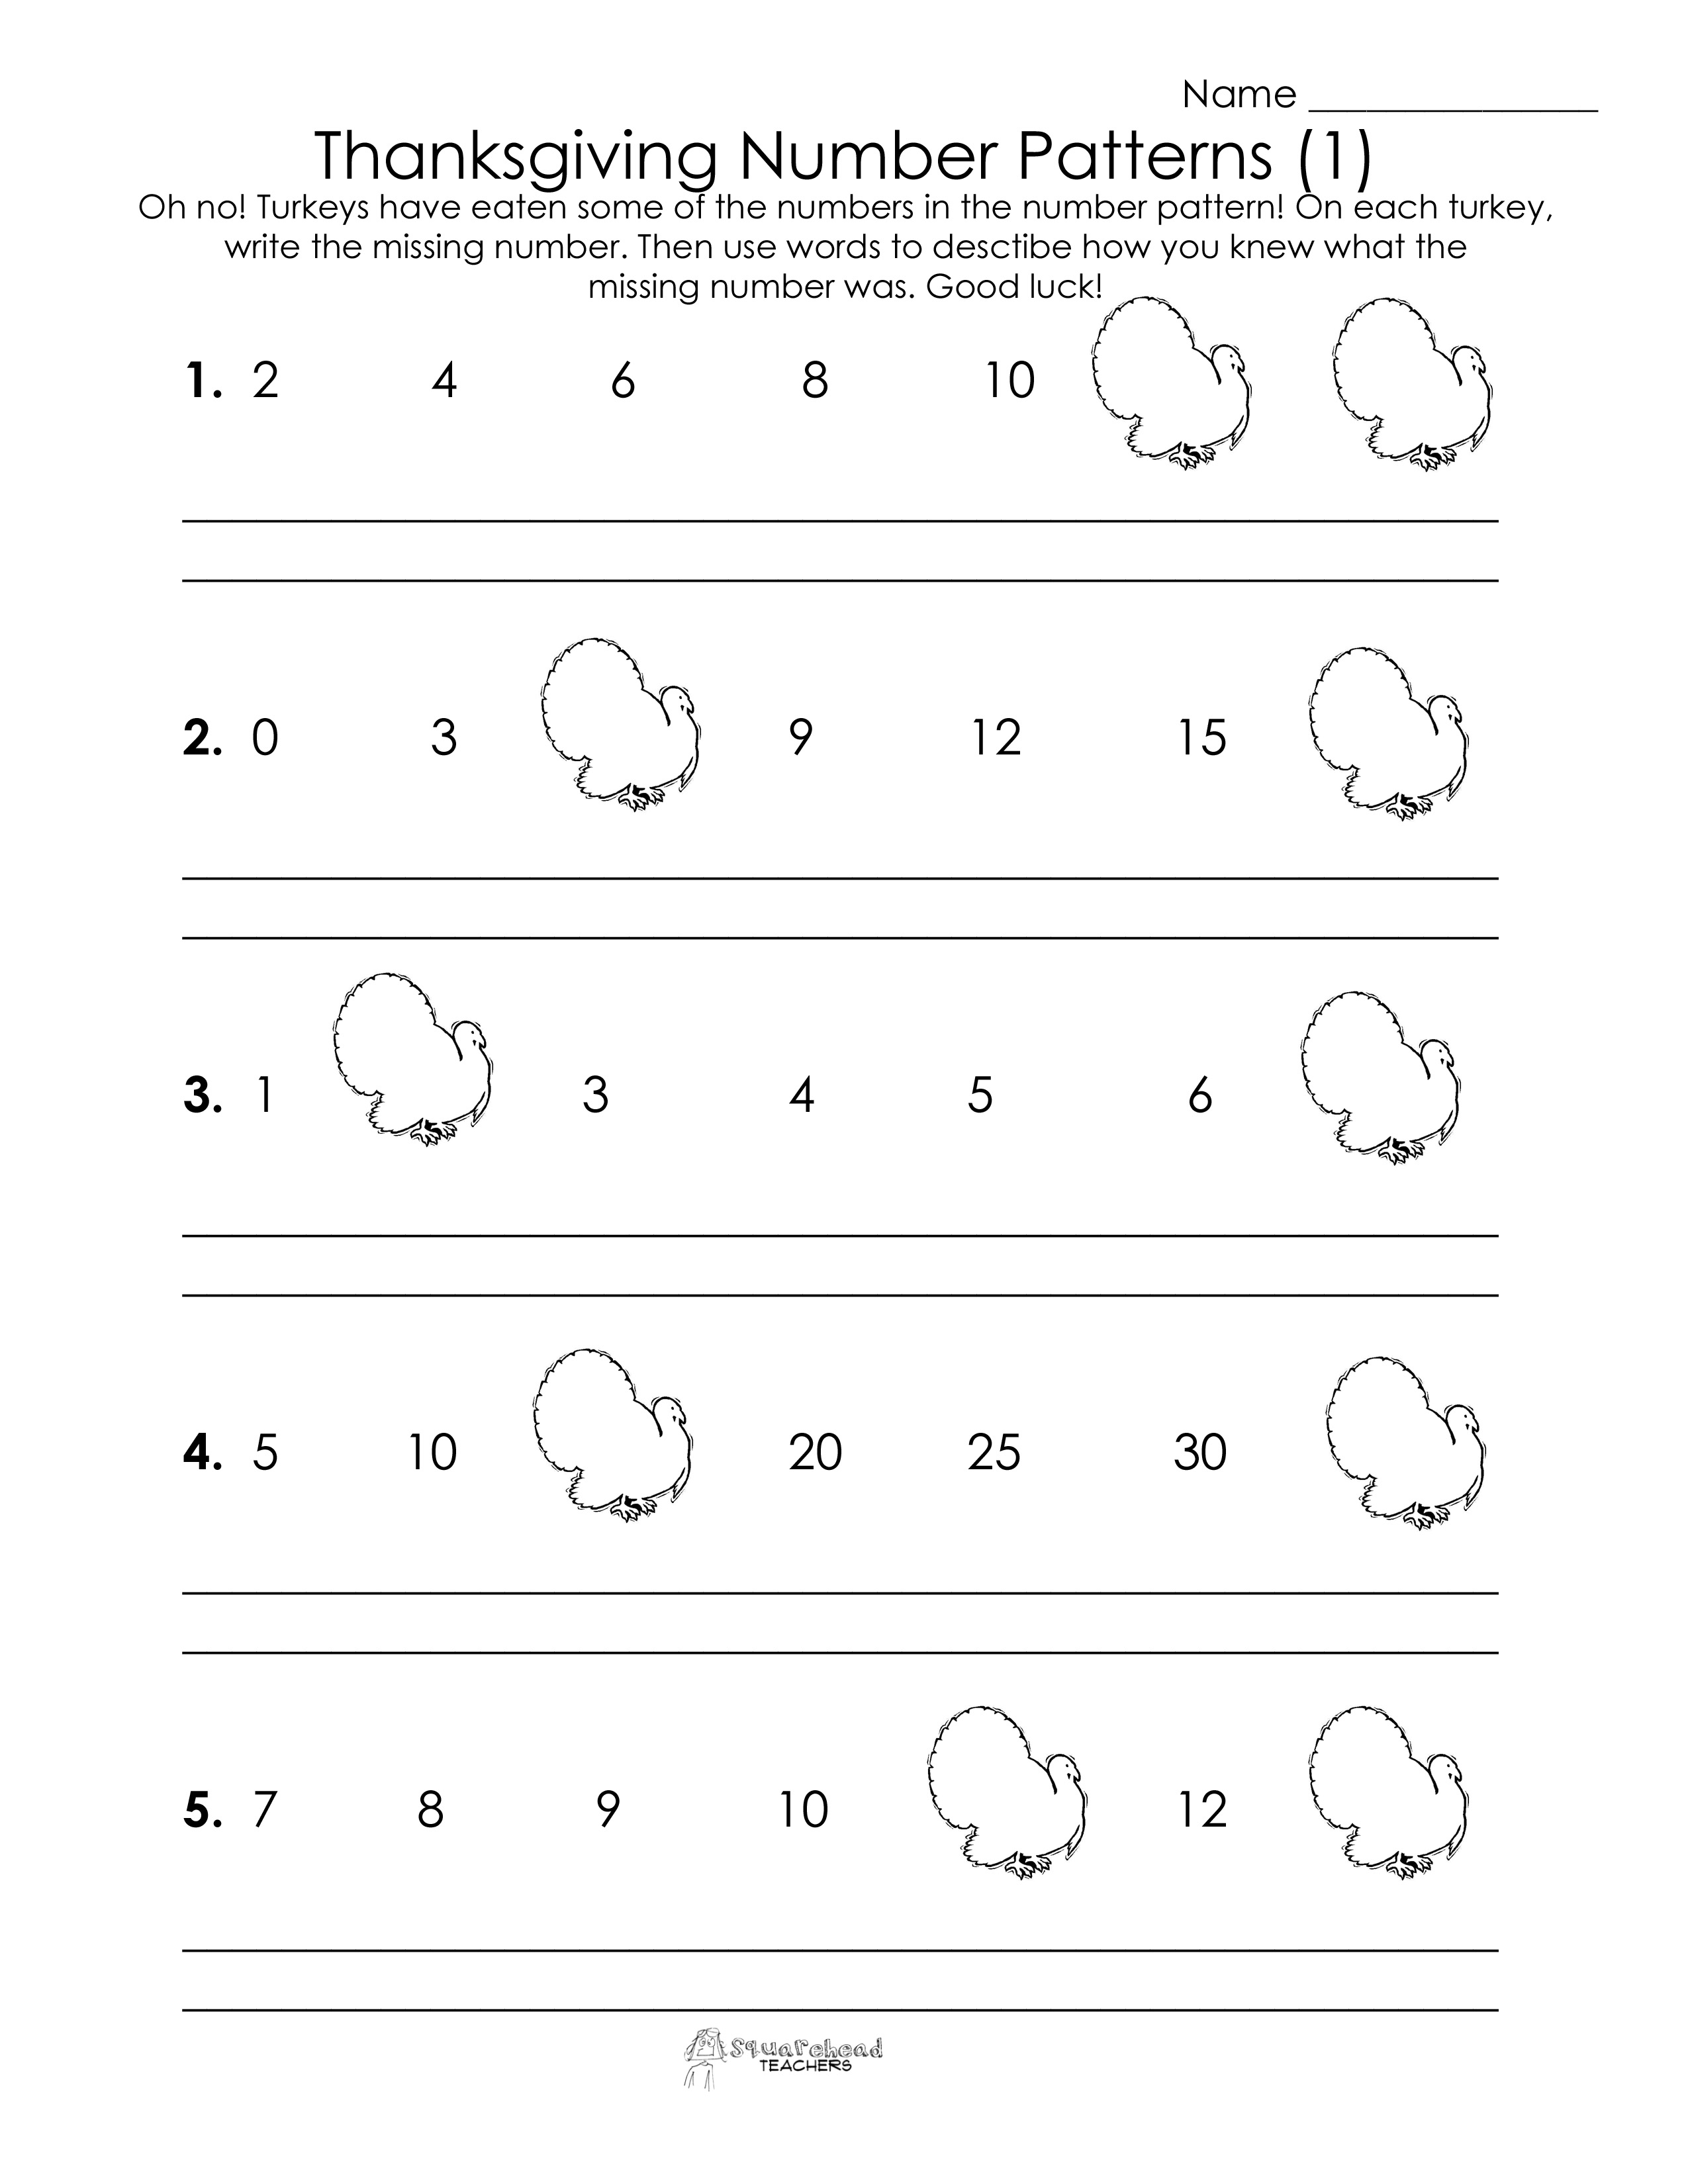 Number Patterns Worksheets Elementary Image